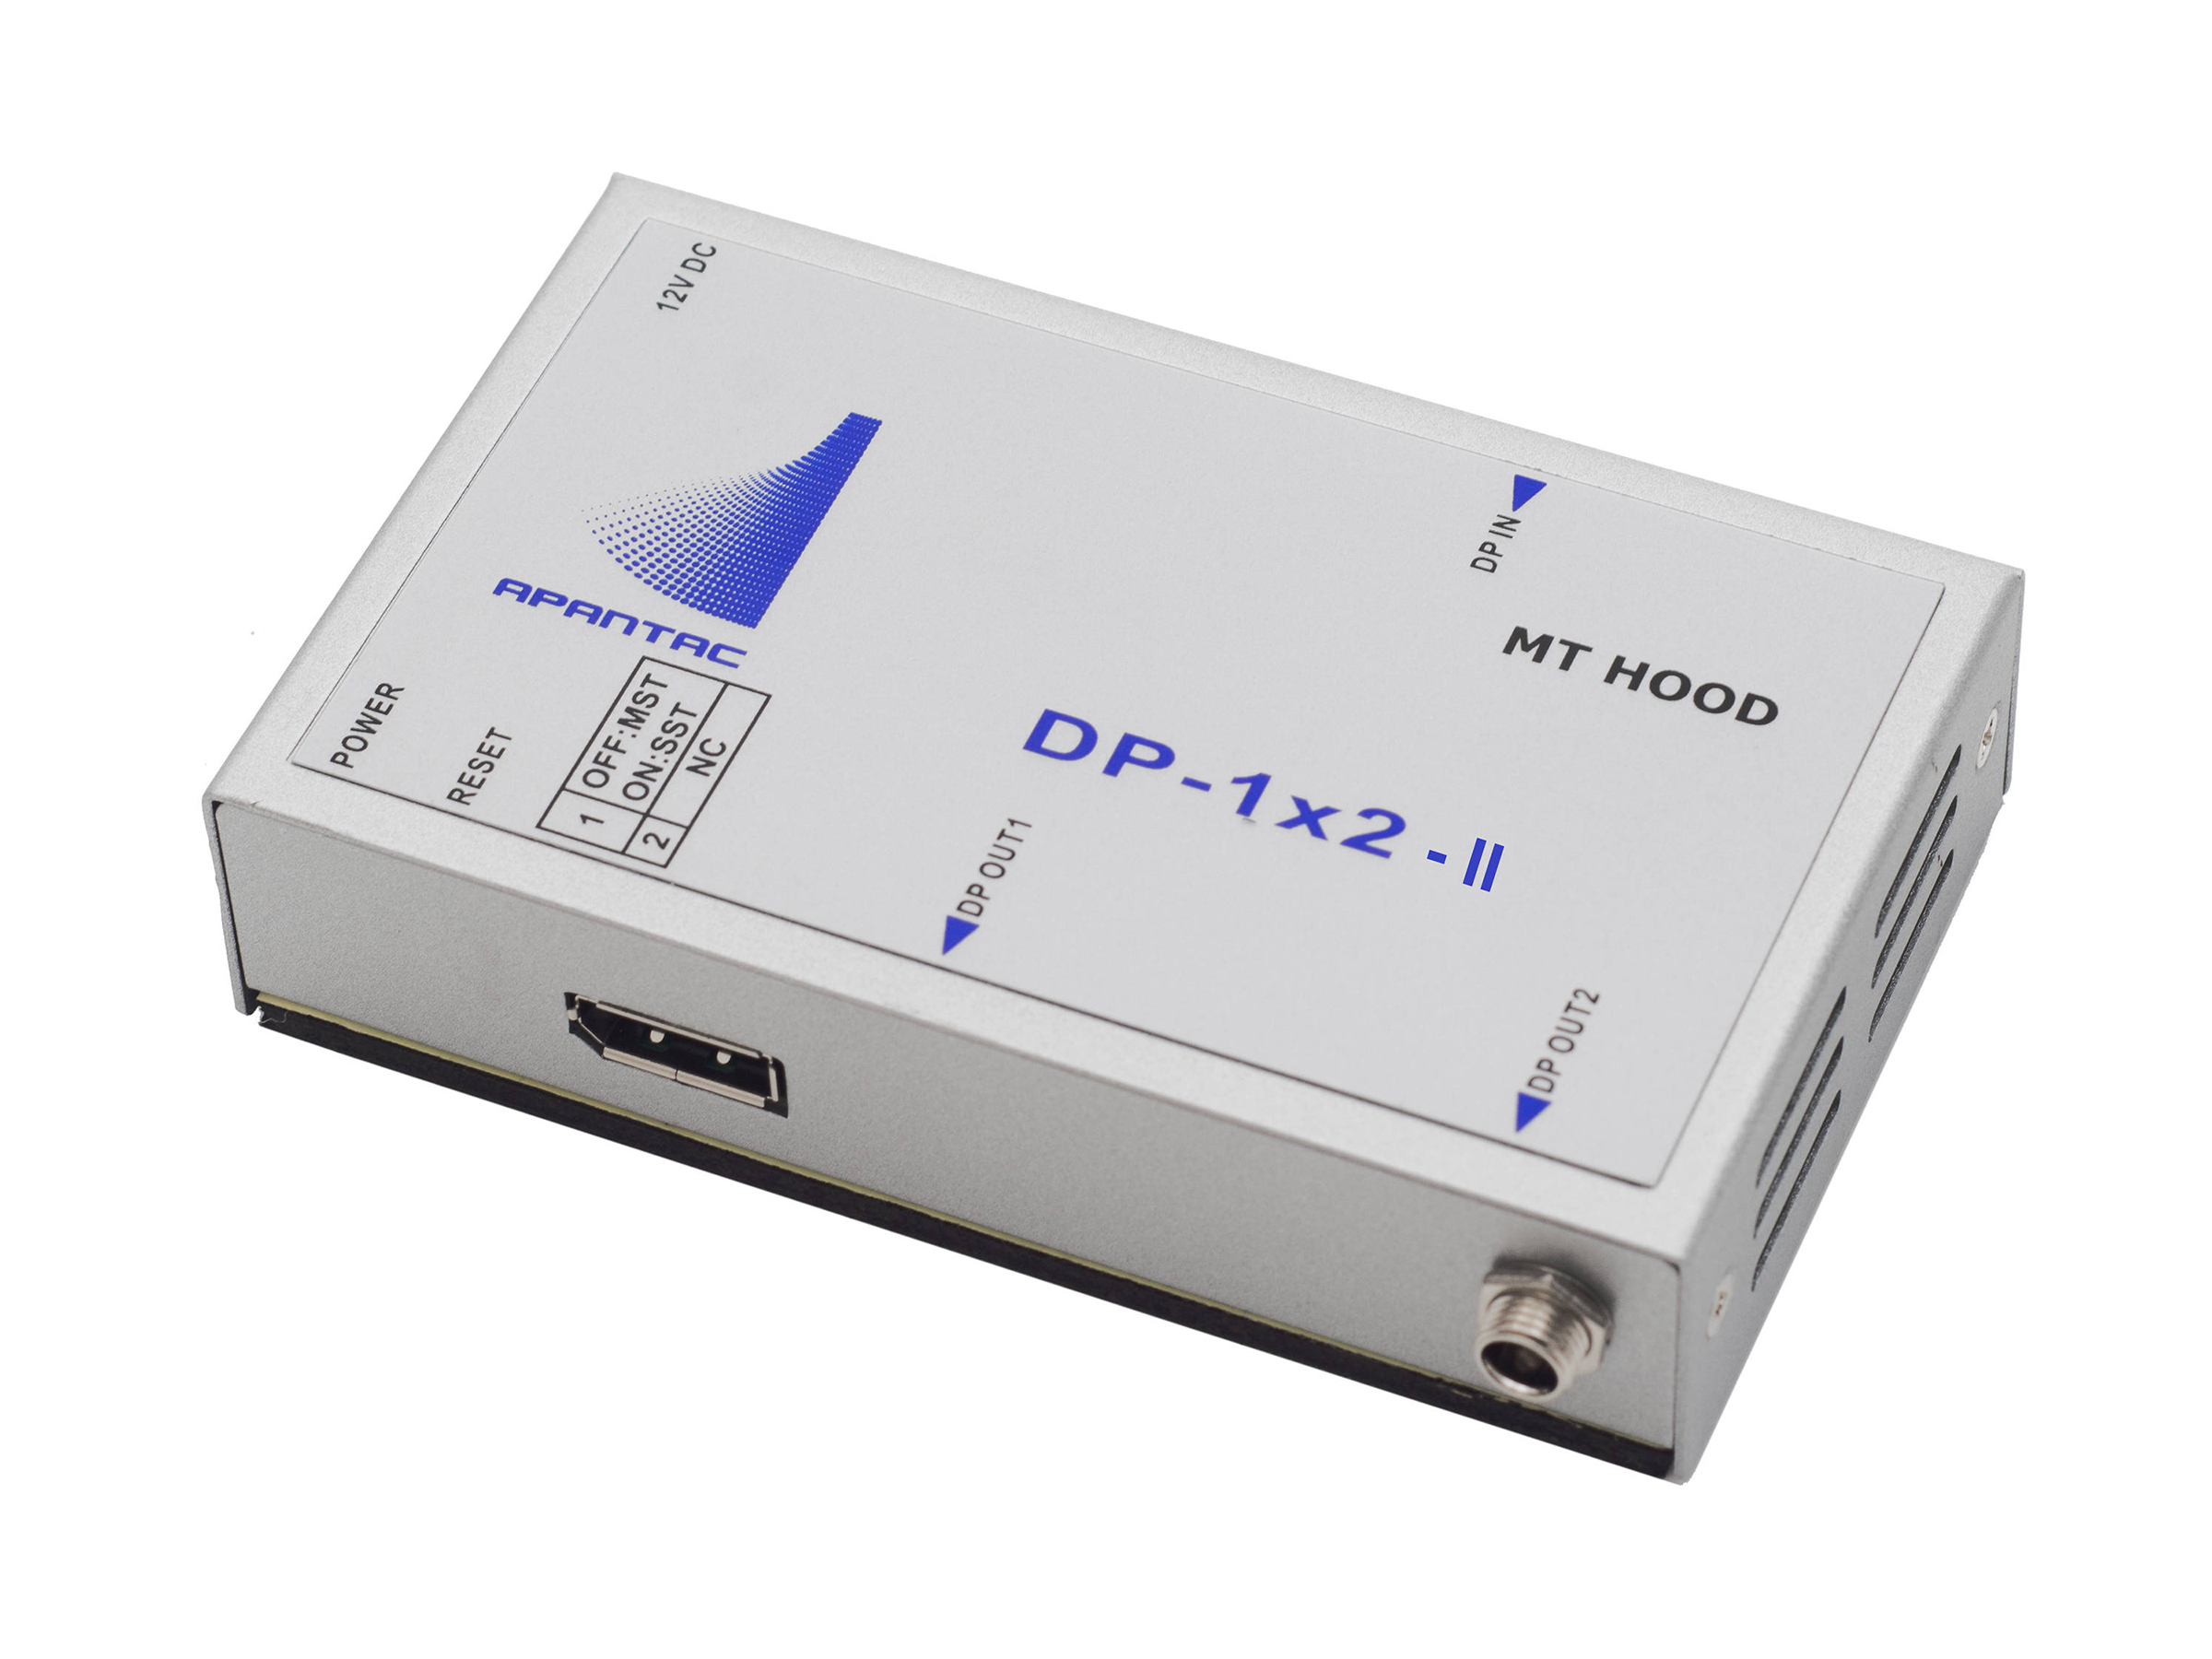 Apantac DP-1x2-II 1x2 DisplayPort 1.2 Distribution Amplifier/Splitter